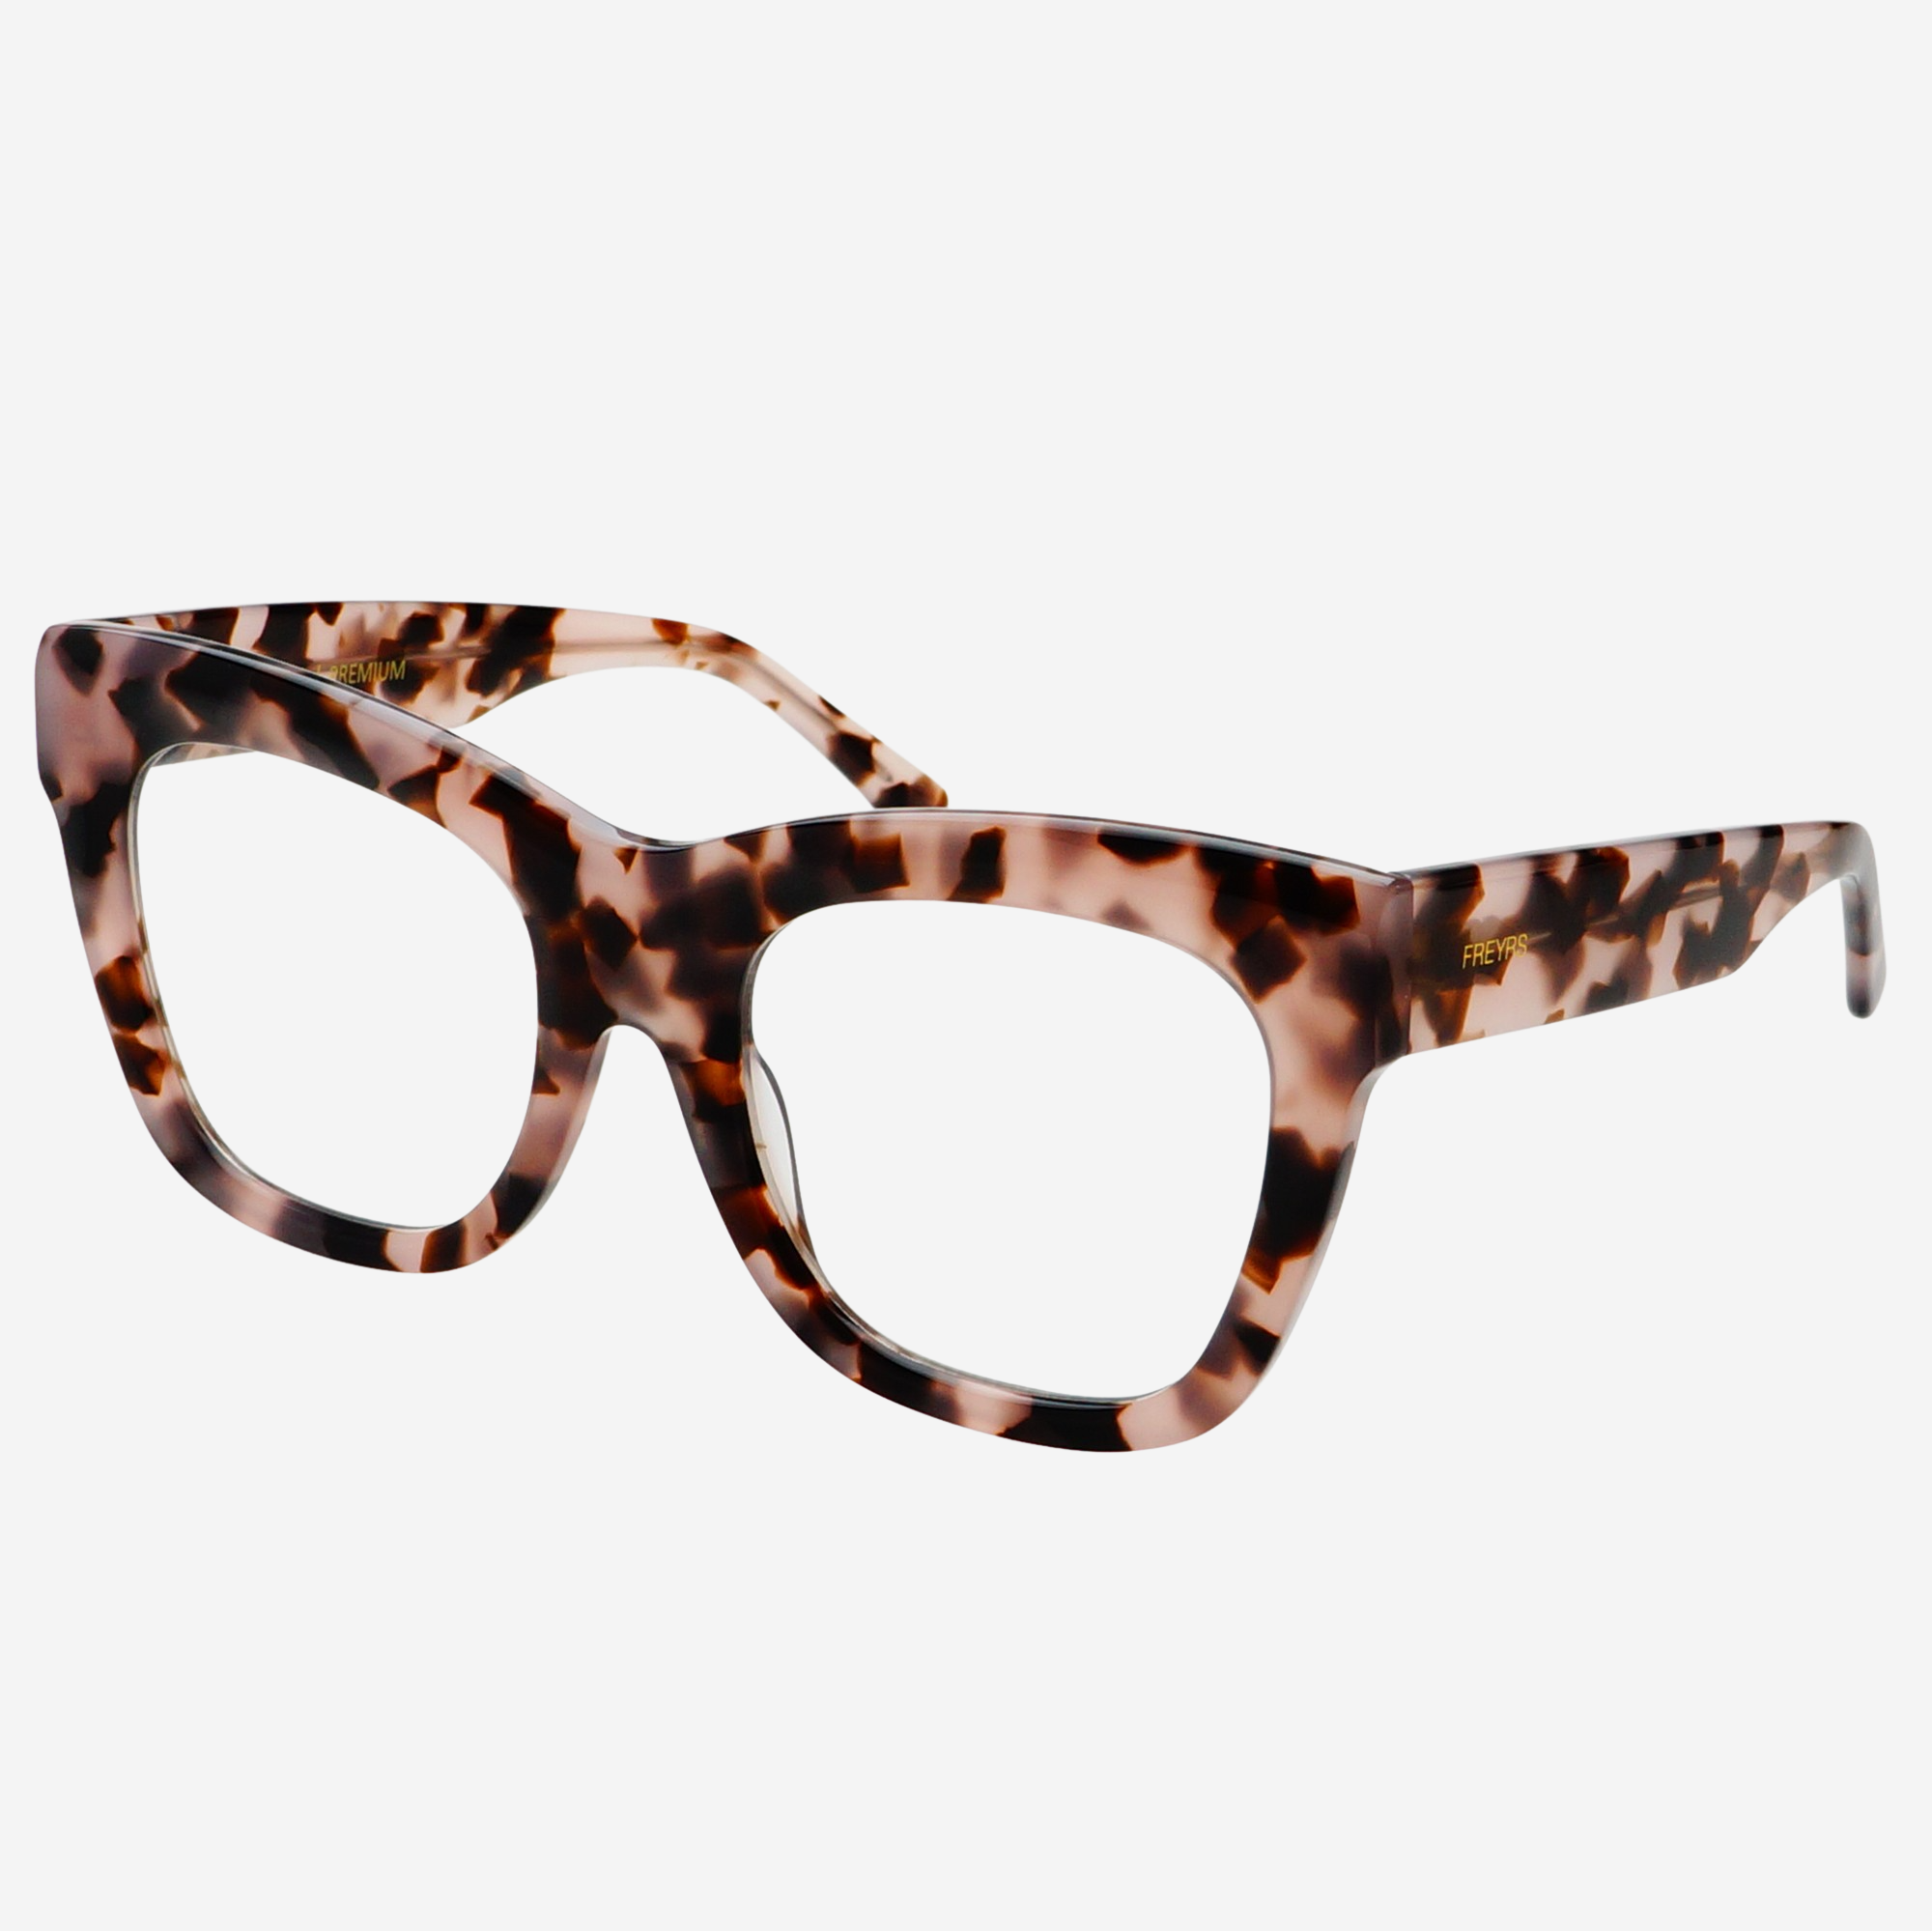 Cat Round Eyewear FREYRS Sunglasses by Womens Large Eye Roxy